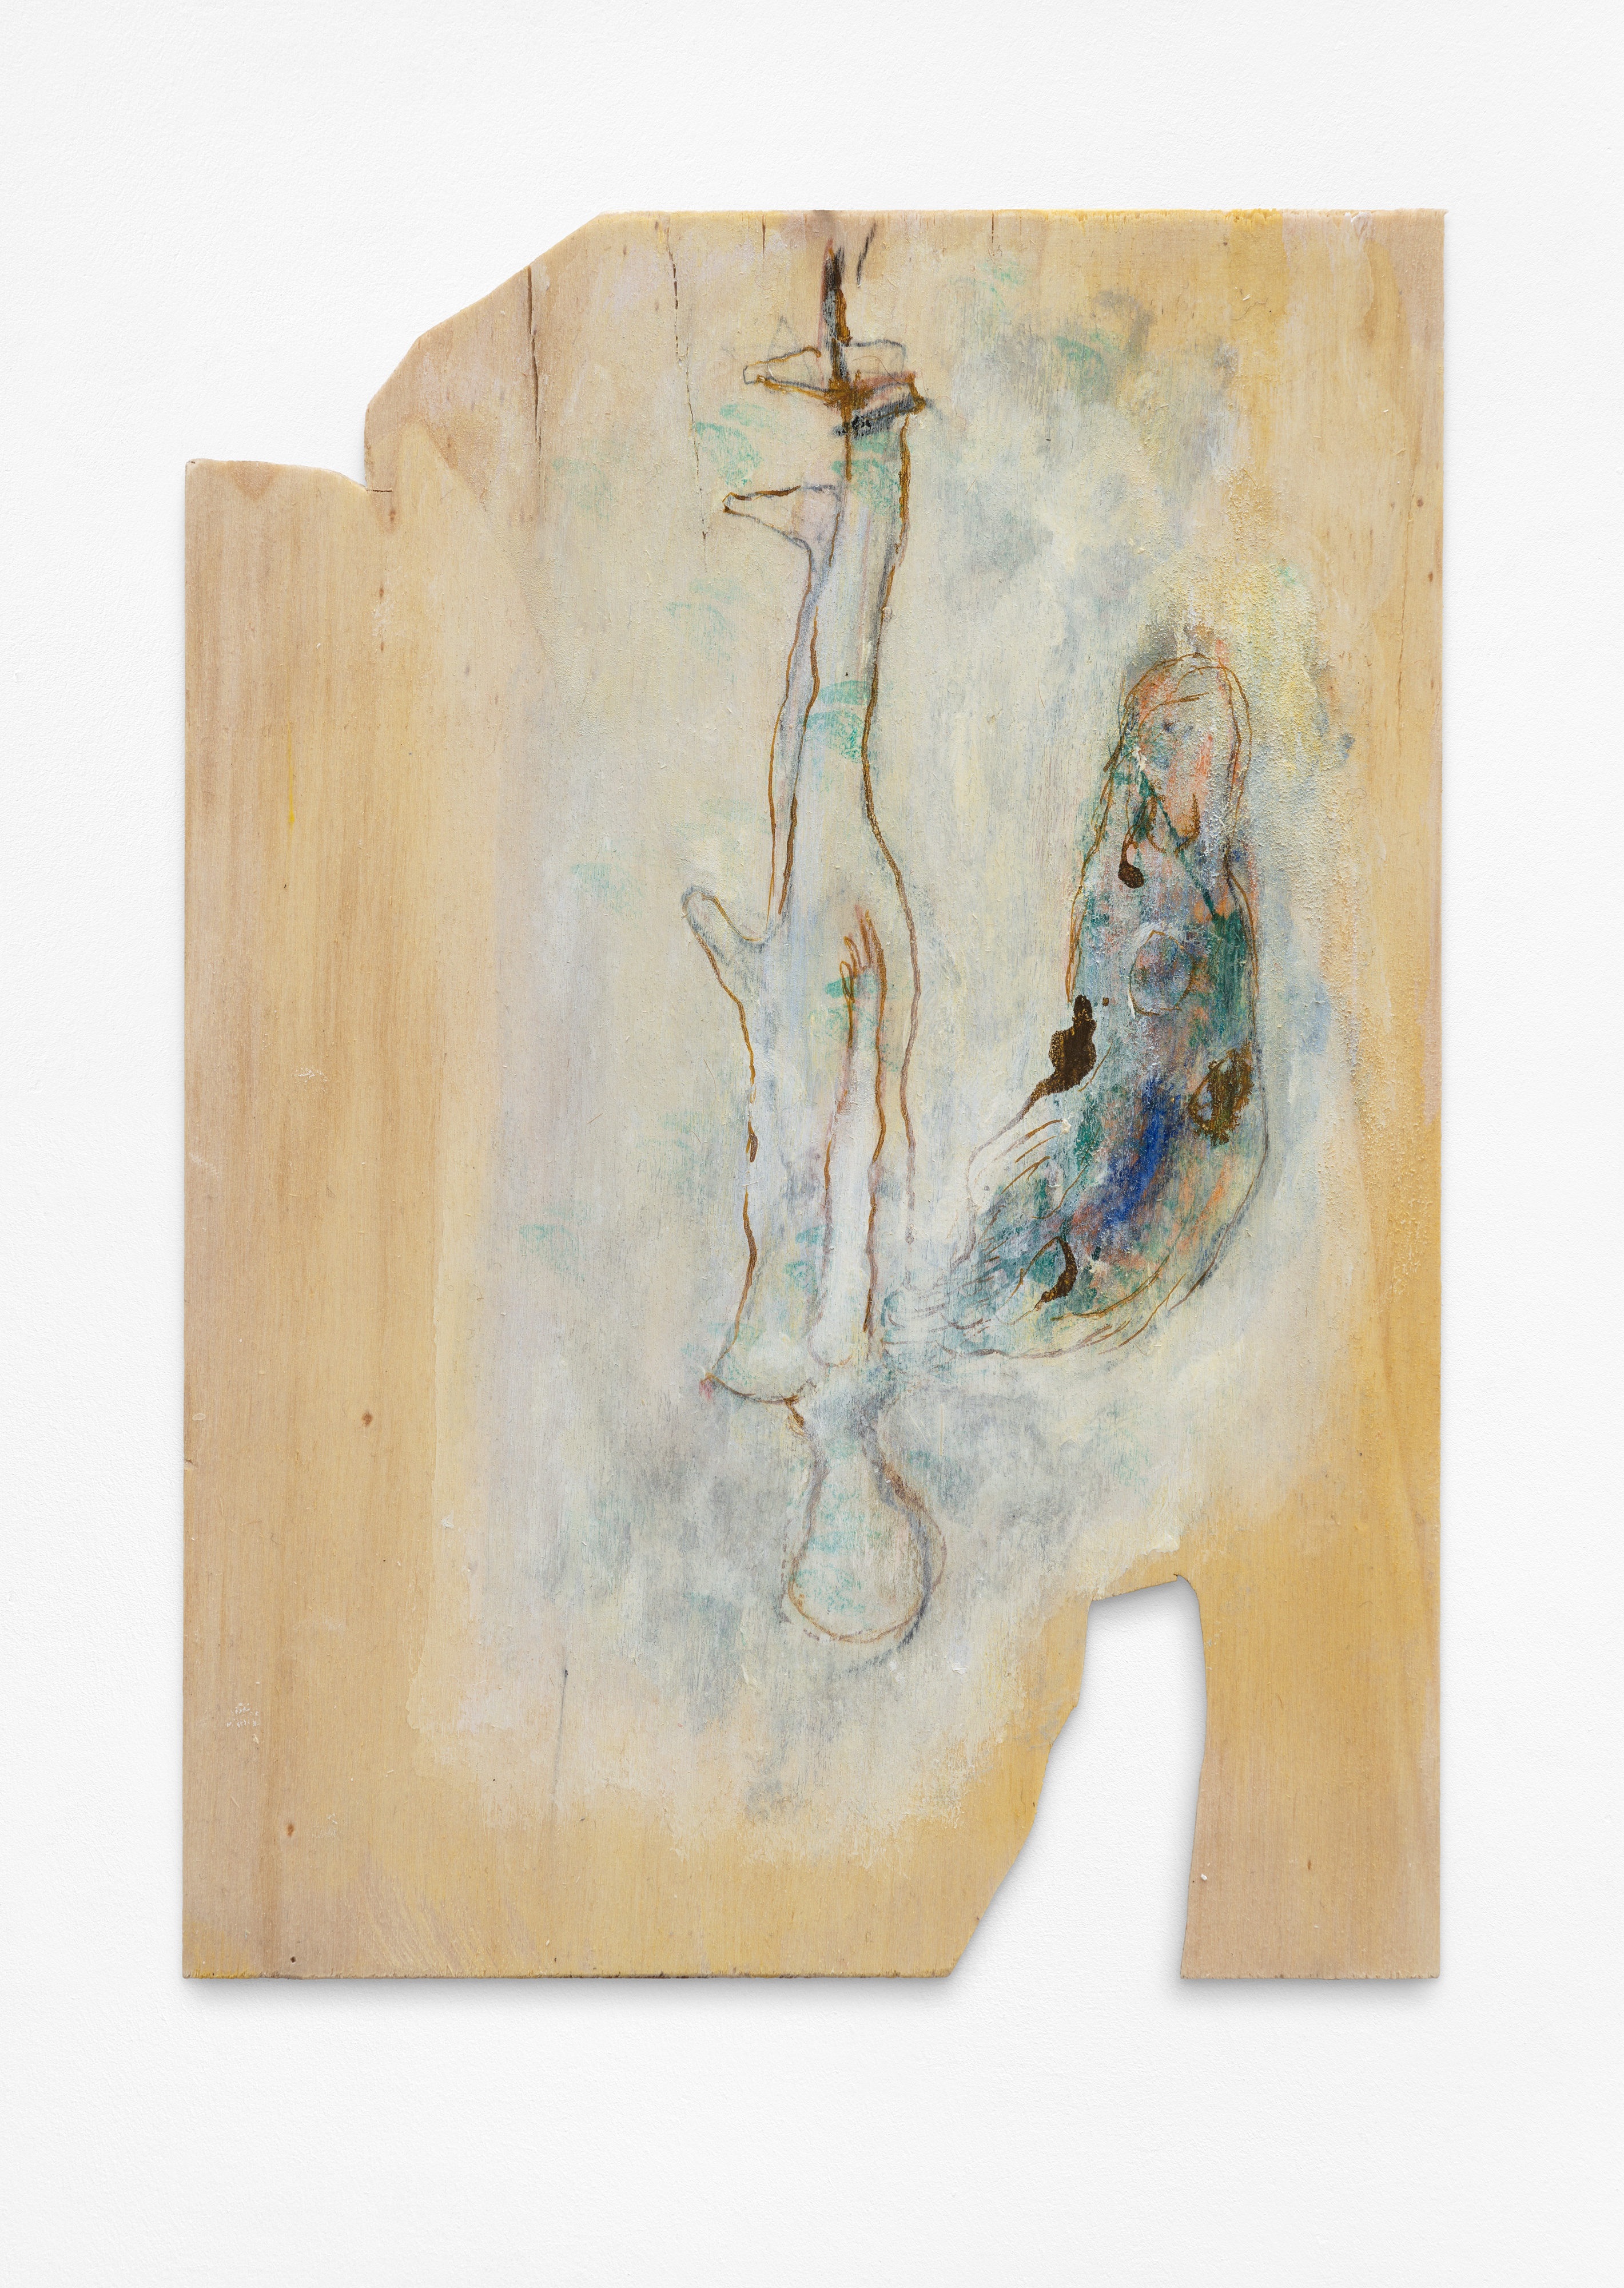 Galerie Barbara Thumm \ Valérie Favre: Engel. (VFa-18-019) \ Engel. (2018)